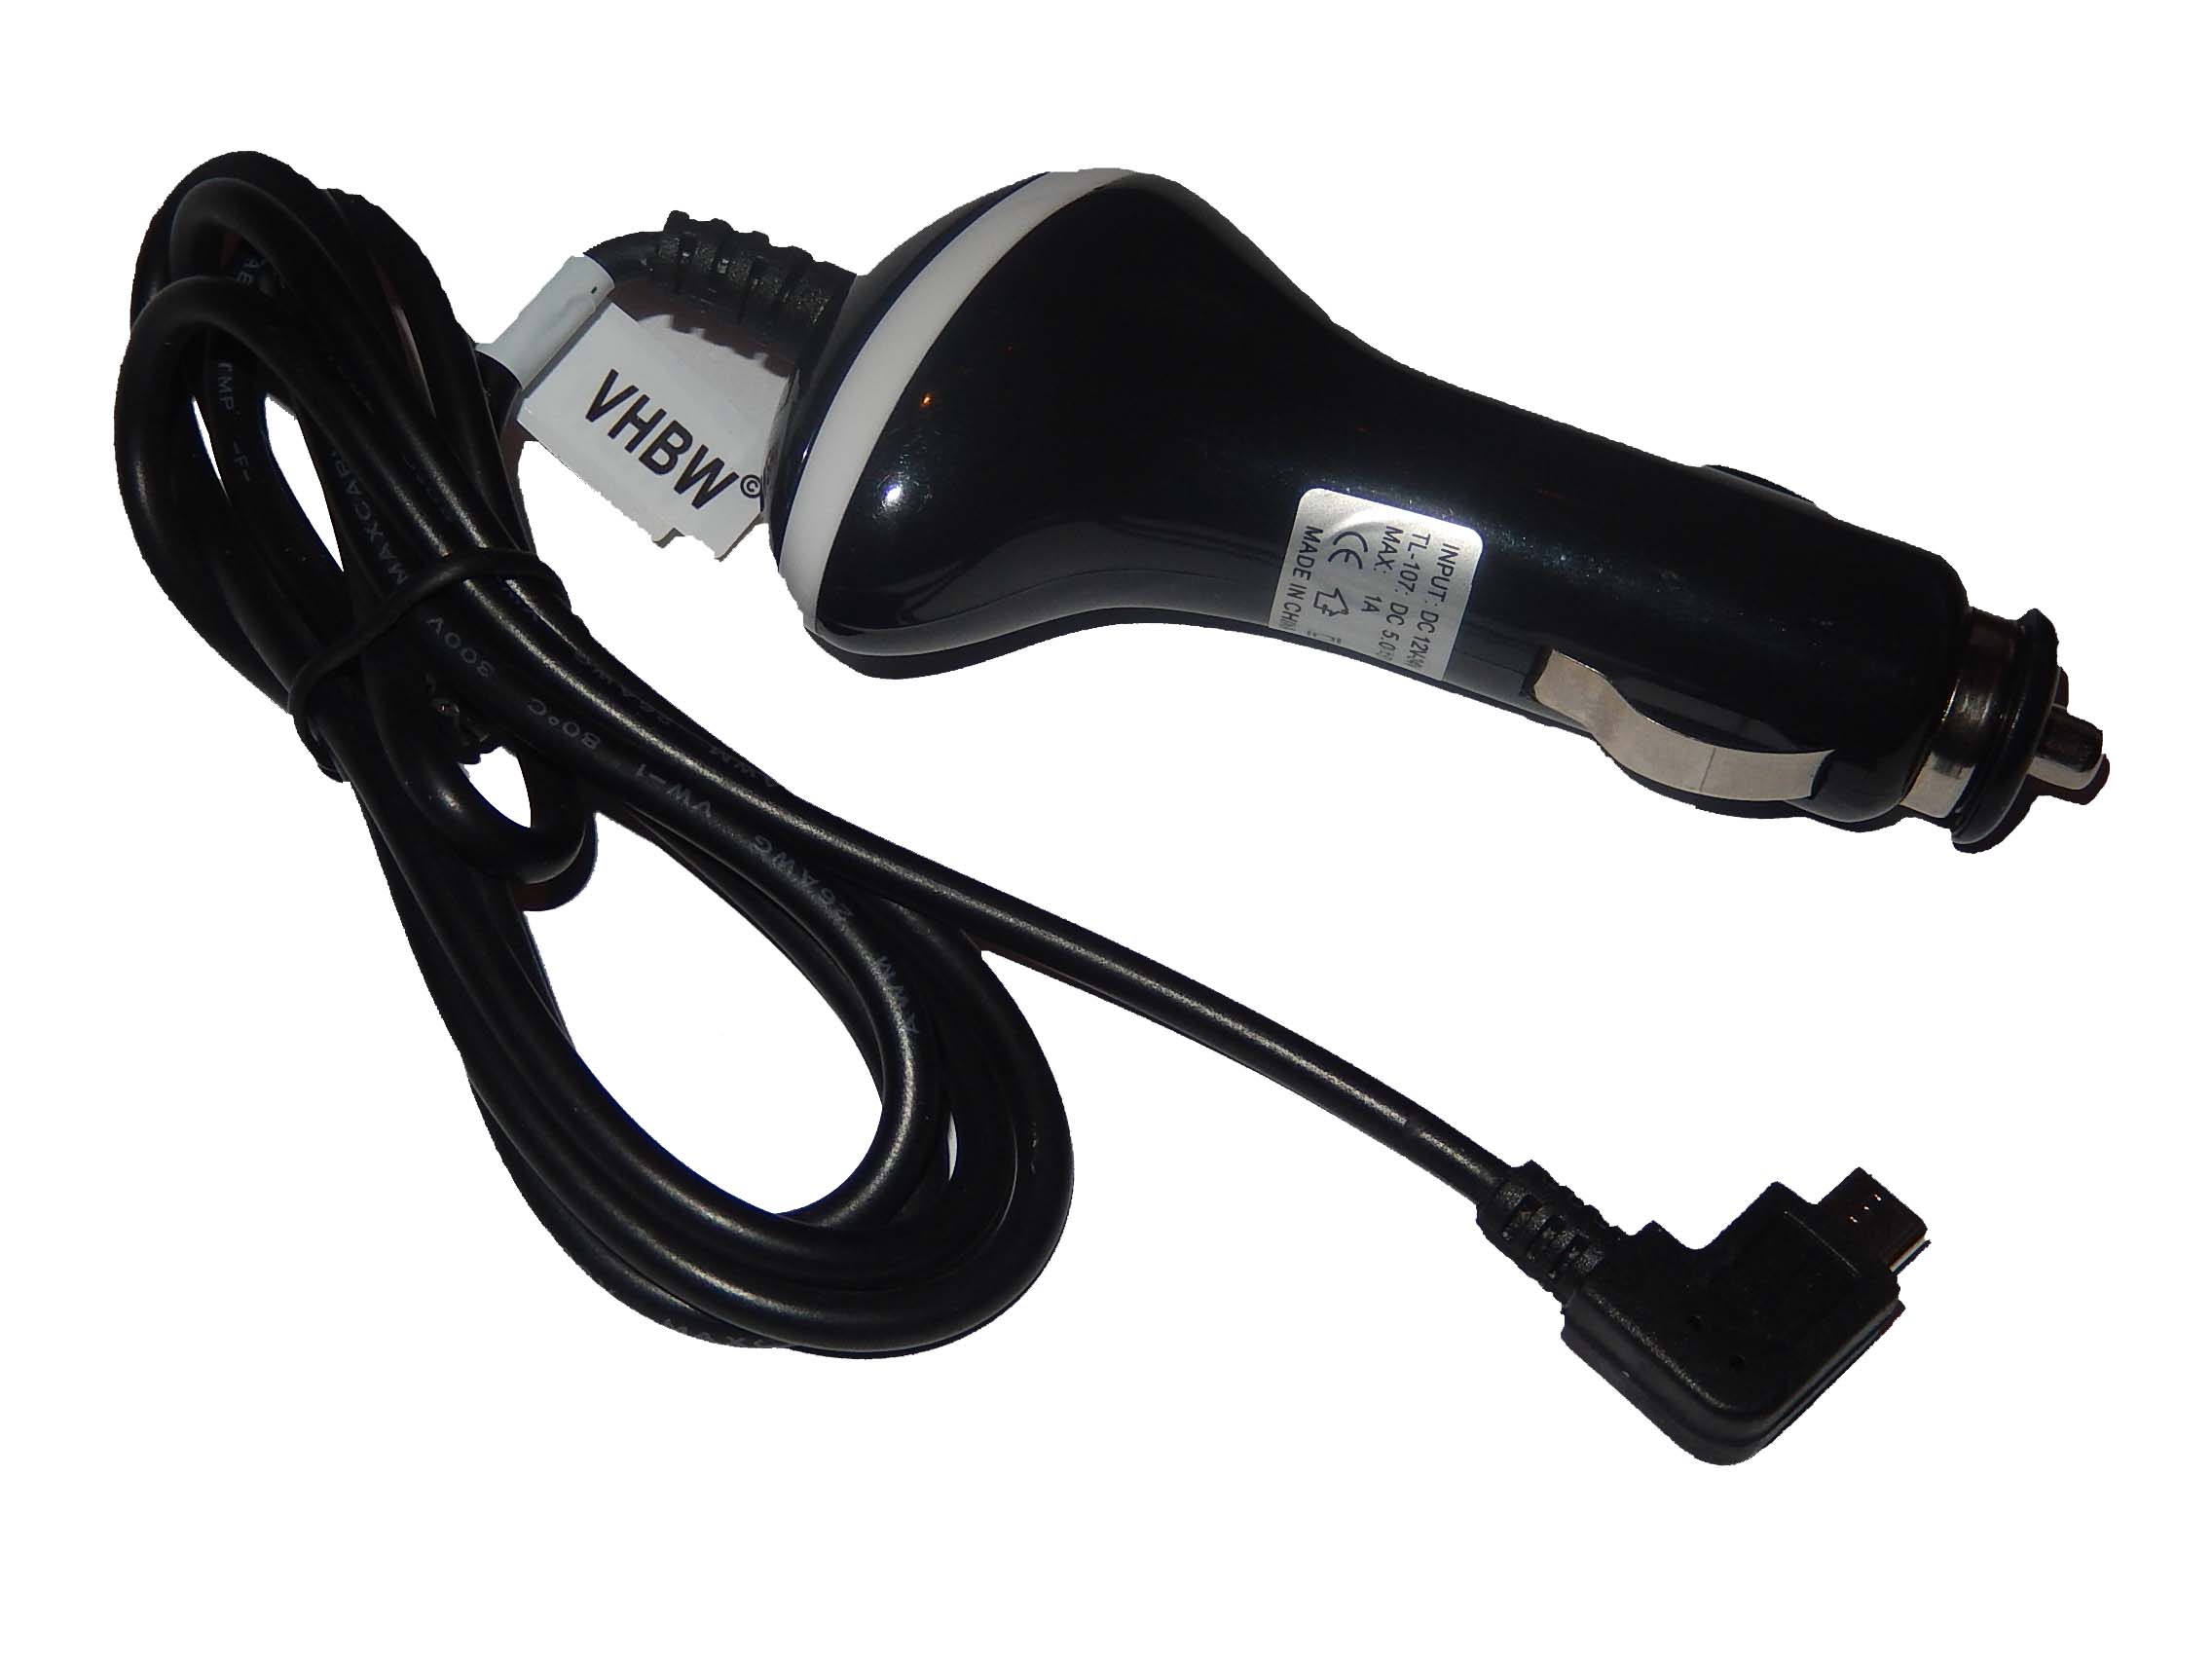 Chargeur Lightning sur allume-cigare (12V) avec 2e prise USB